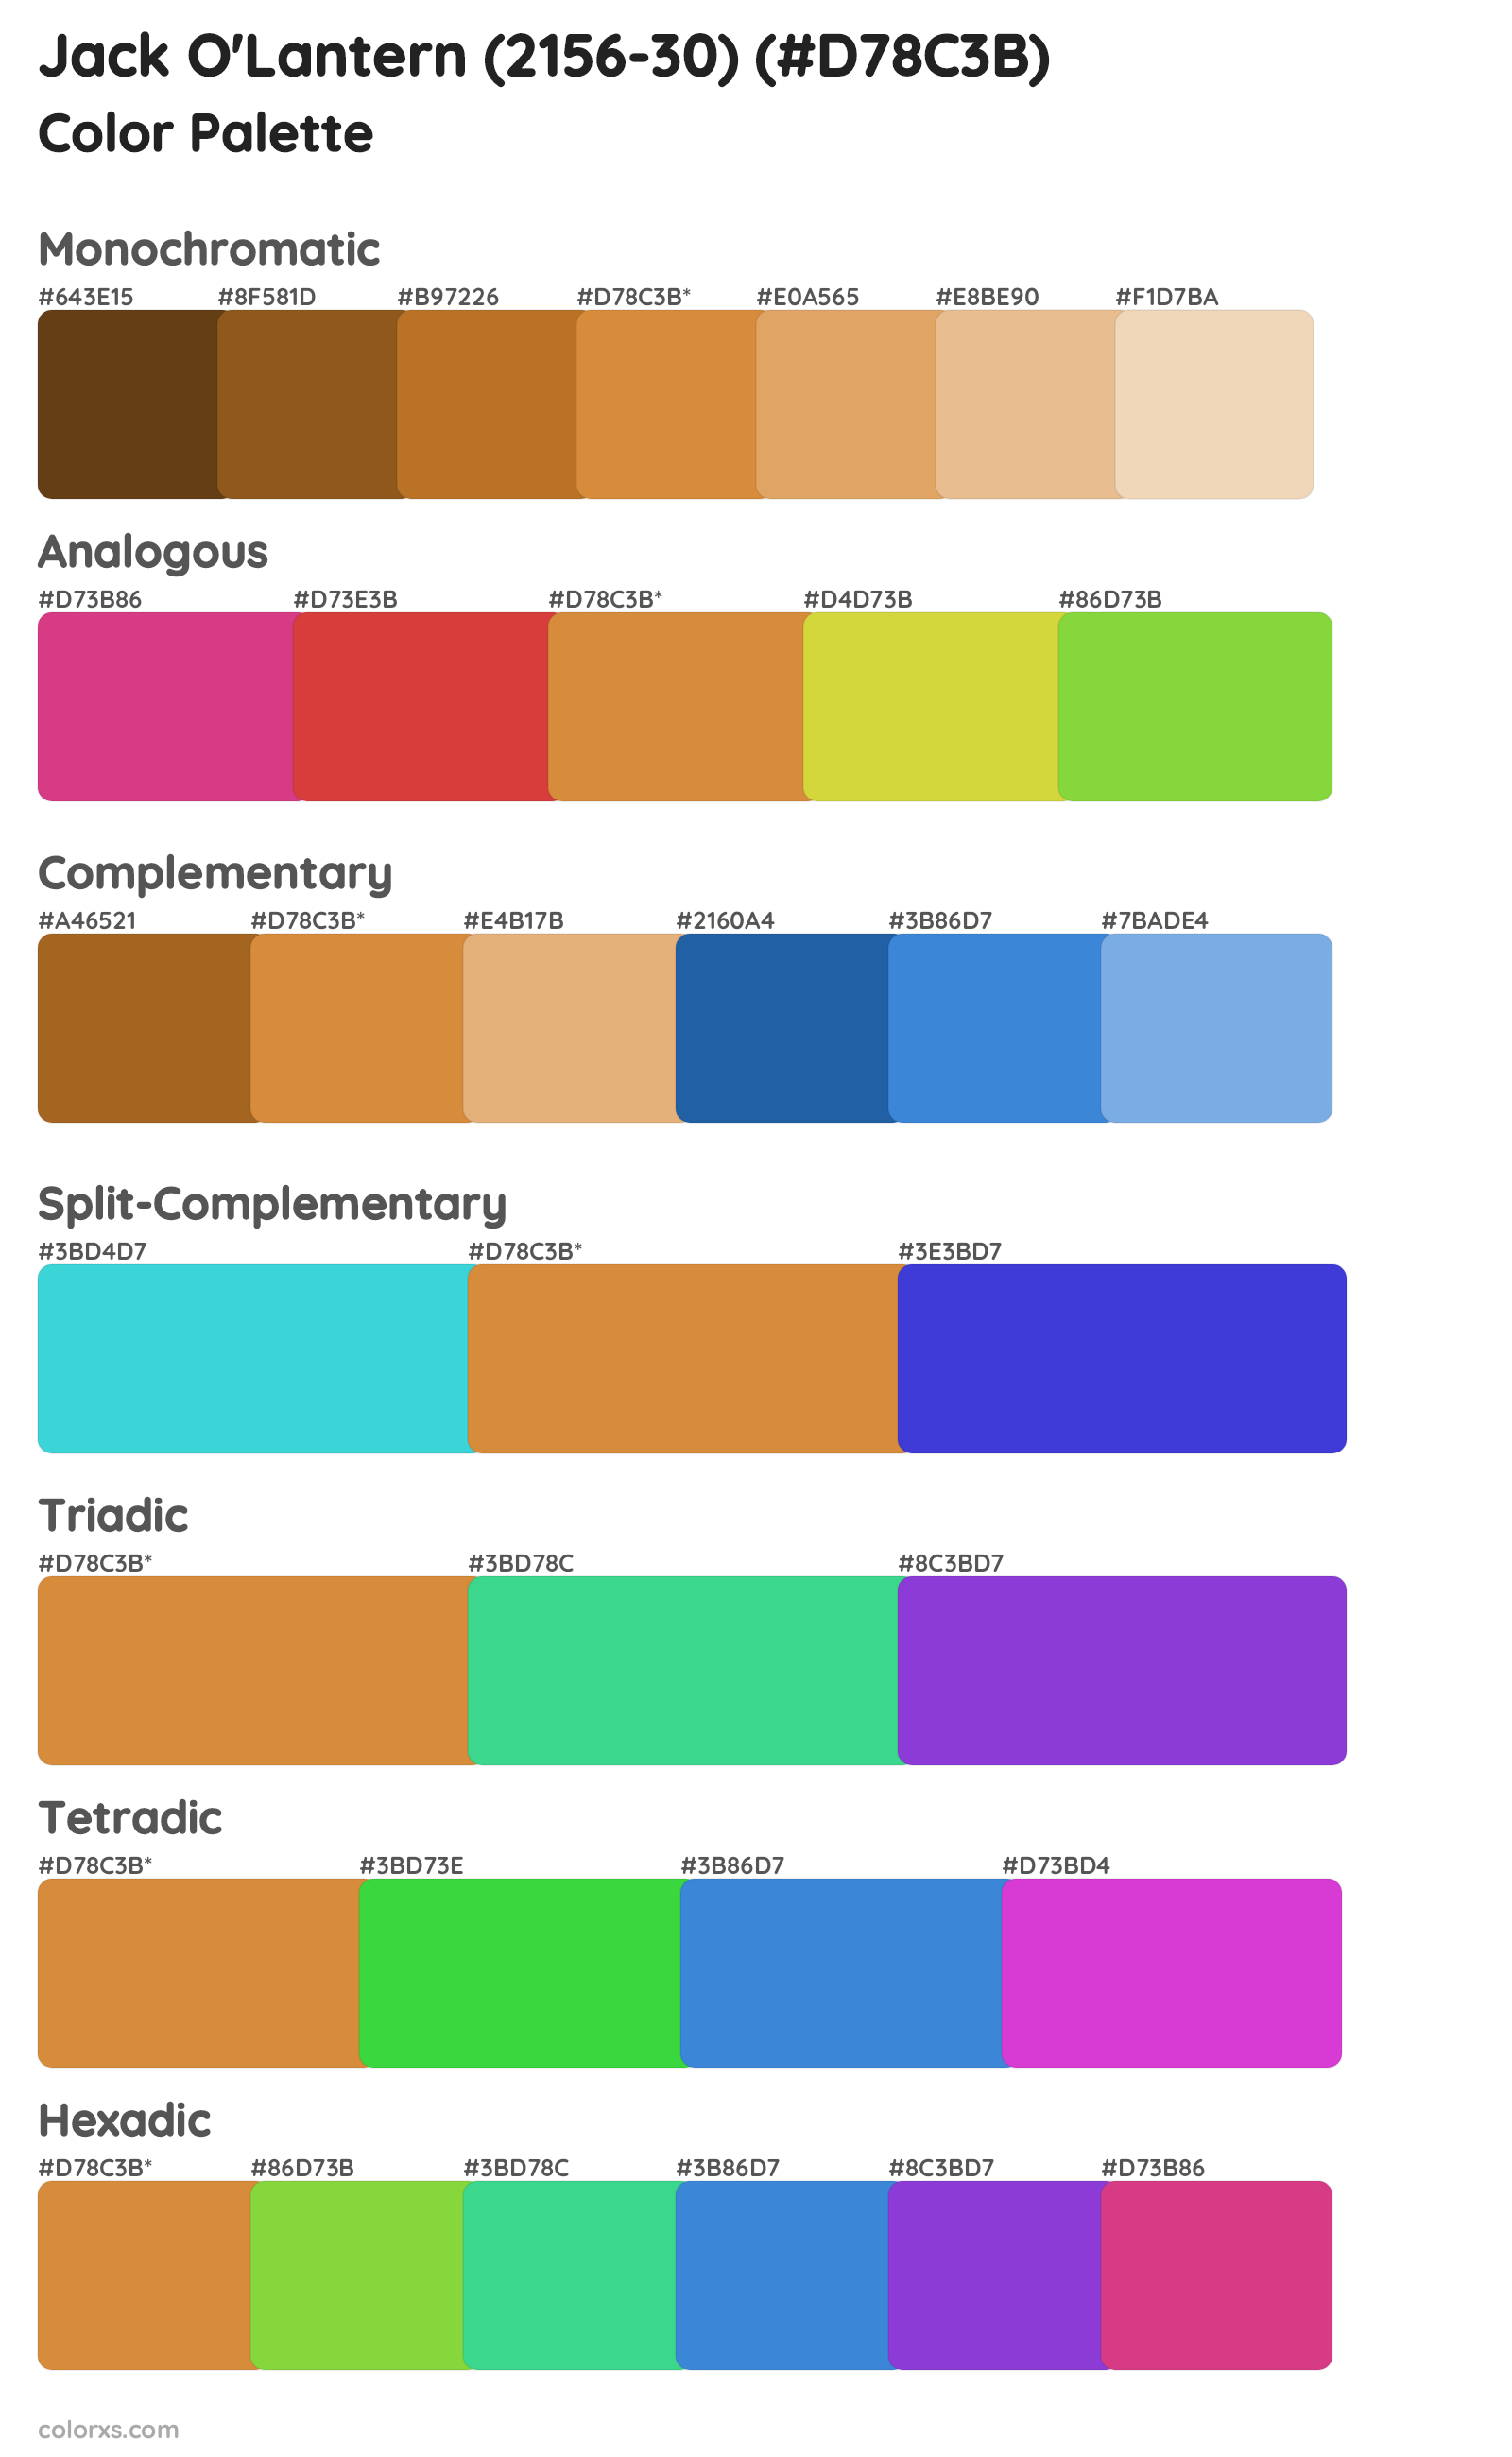 Jack O'Lantern (2156-30) Color Scheme Palettes